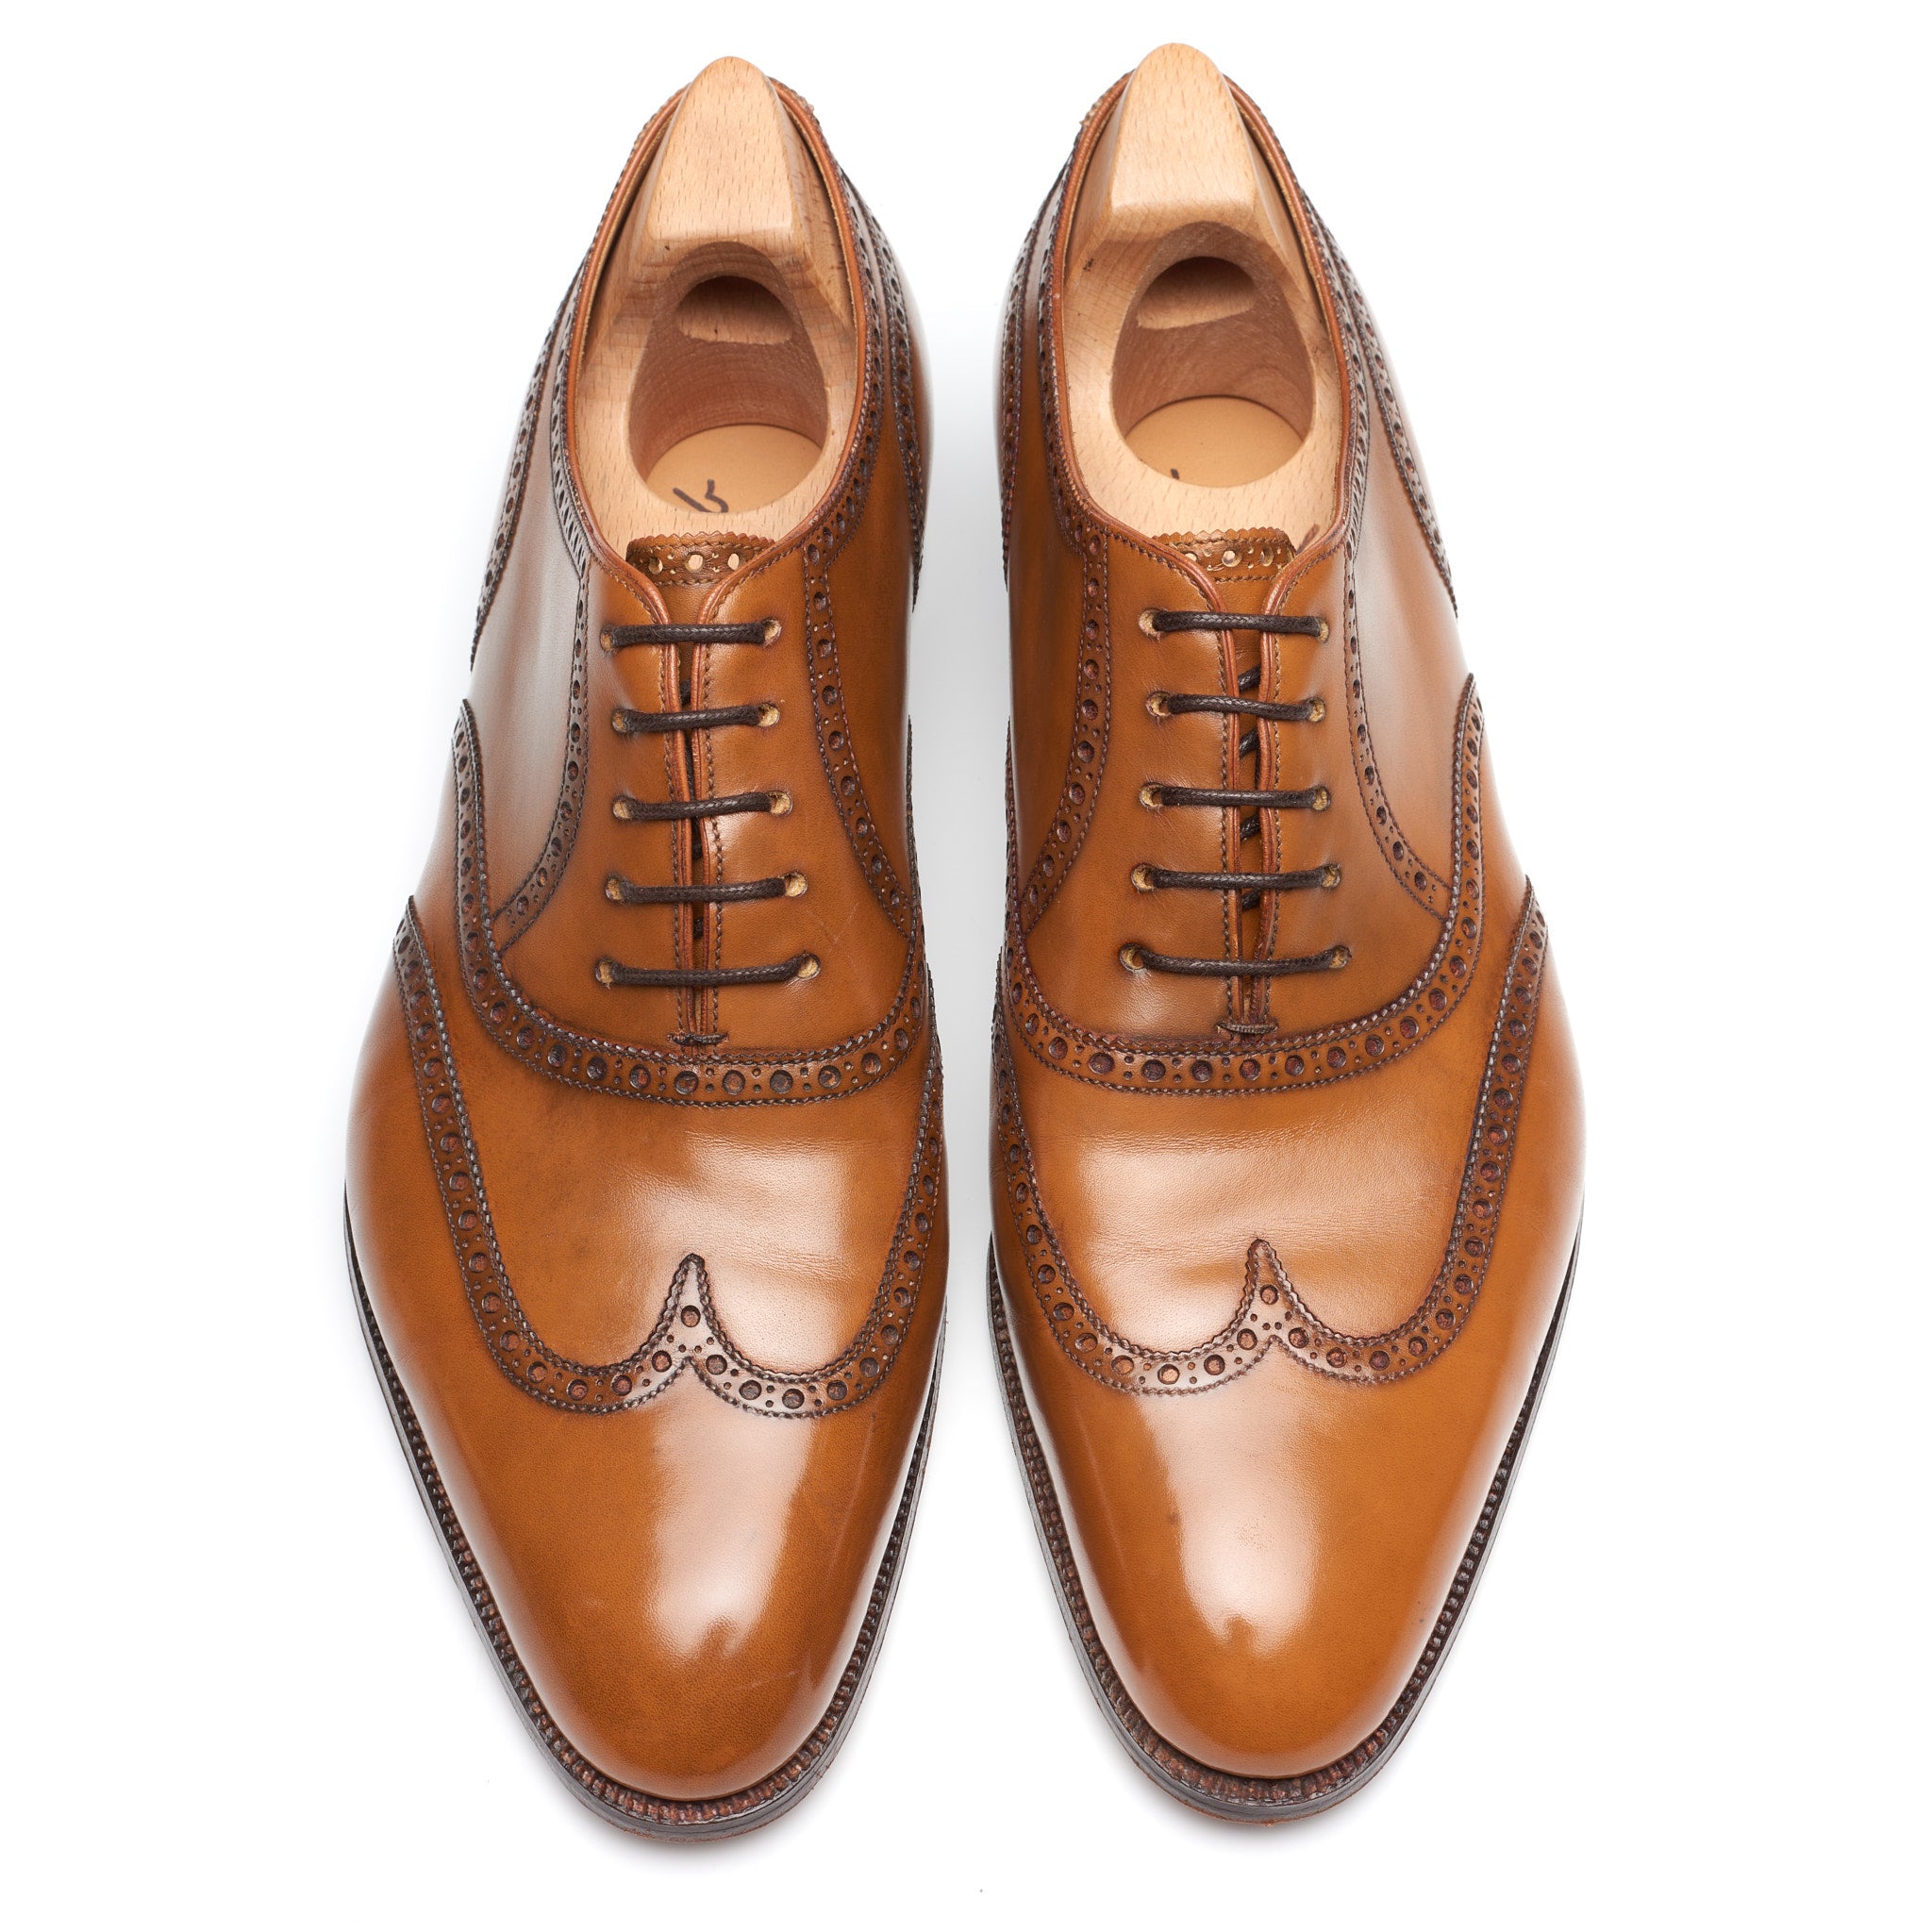 JOHN LOBB Paris Bespoke Cognac Calf Brogue Wingtip Oxford Shoes UK 7.5 US 8.5